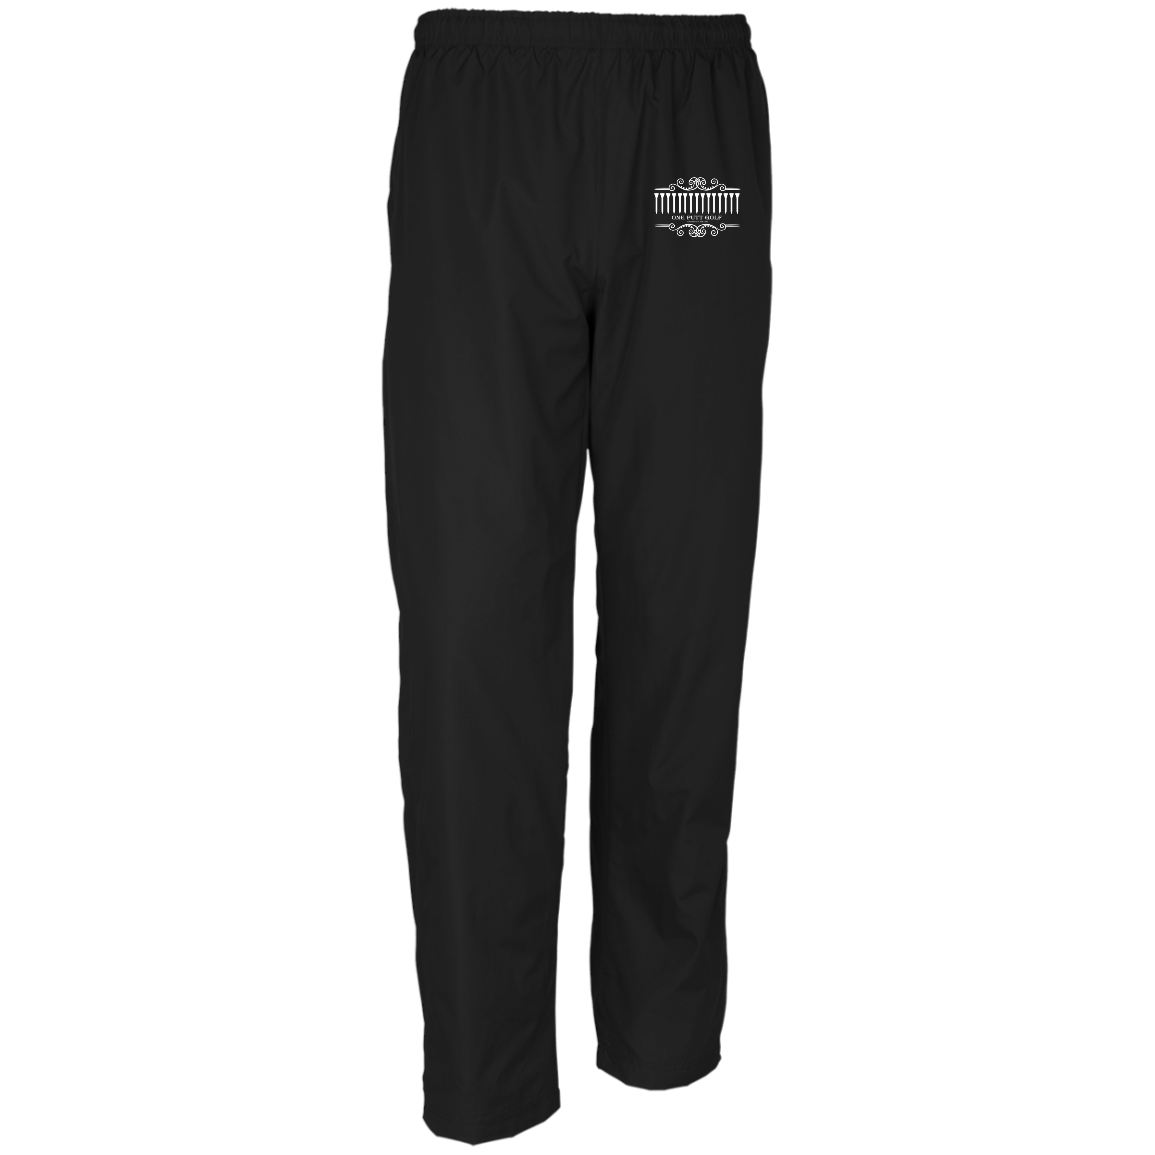 OPG Custom Design #5. Golf Tee-Shirt. Golf Humor. Men's 100% Polyester Wind Pants